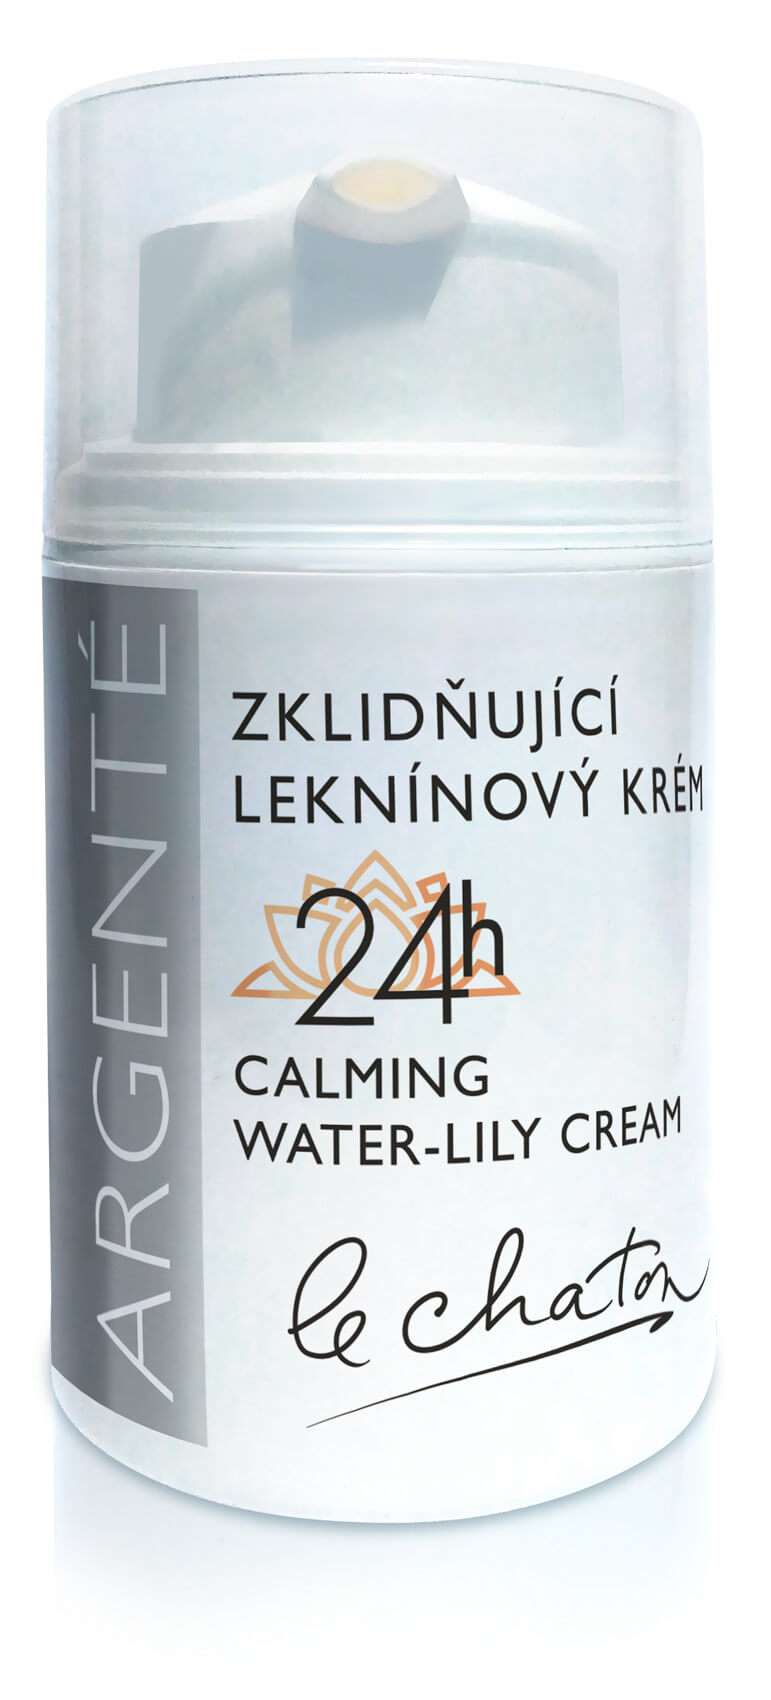 Le Chaton Zklidňující leknínový krém 24 H (Calming Water-Lily Cream) 50 g